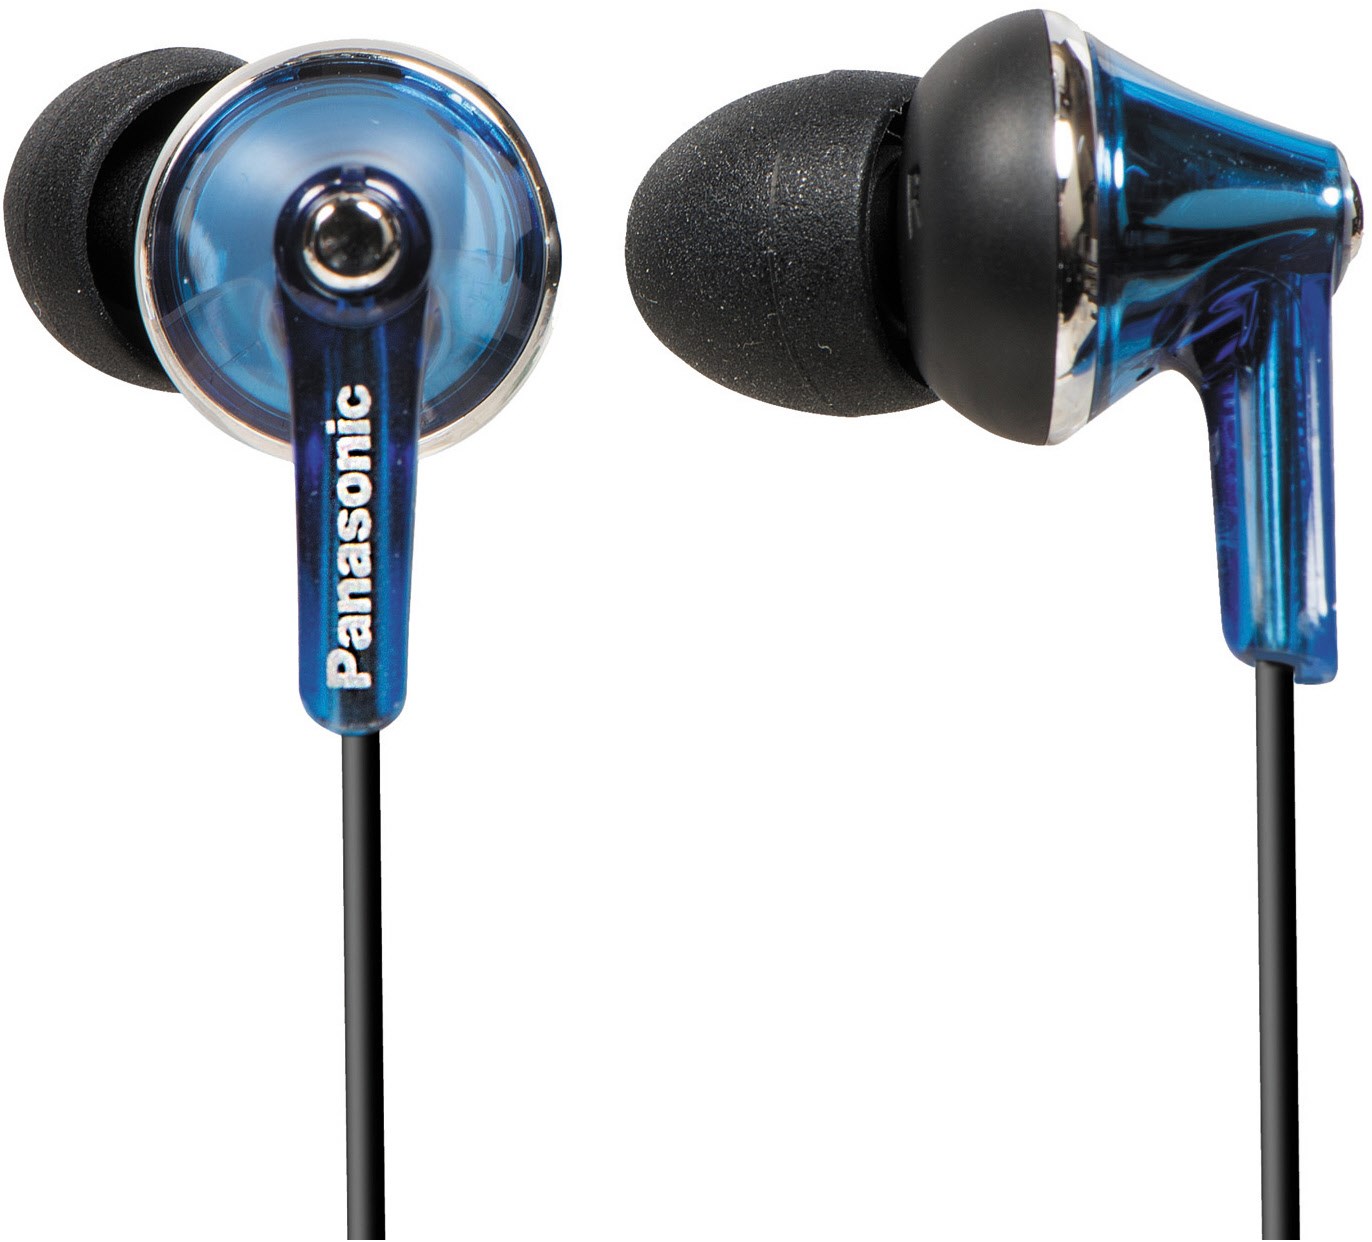 RP-HJE190E-A In-Ear-Kopfhörer mit Kabel blau von Panasonic